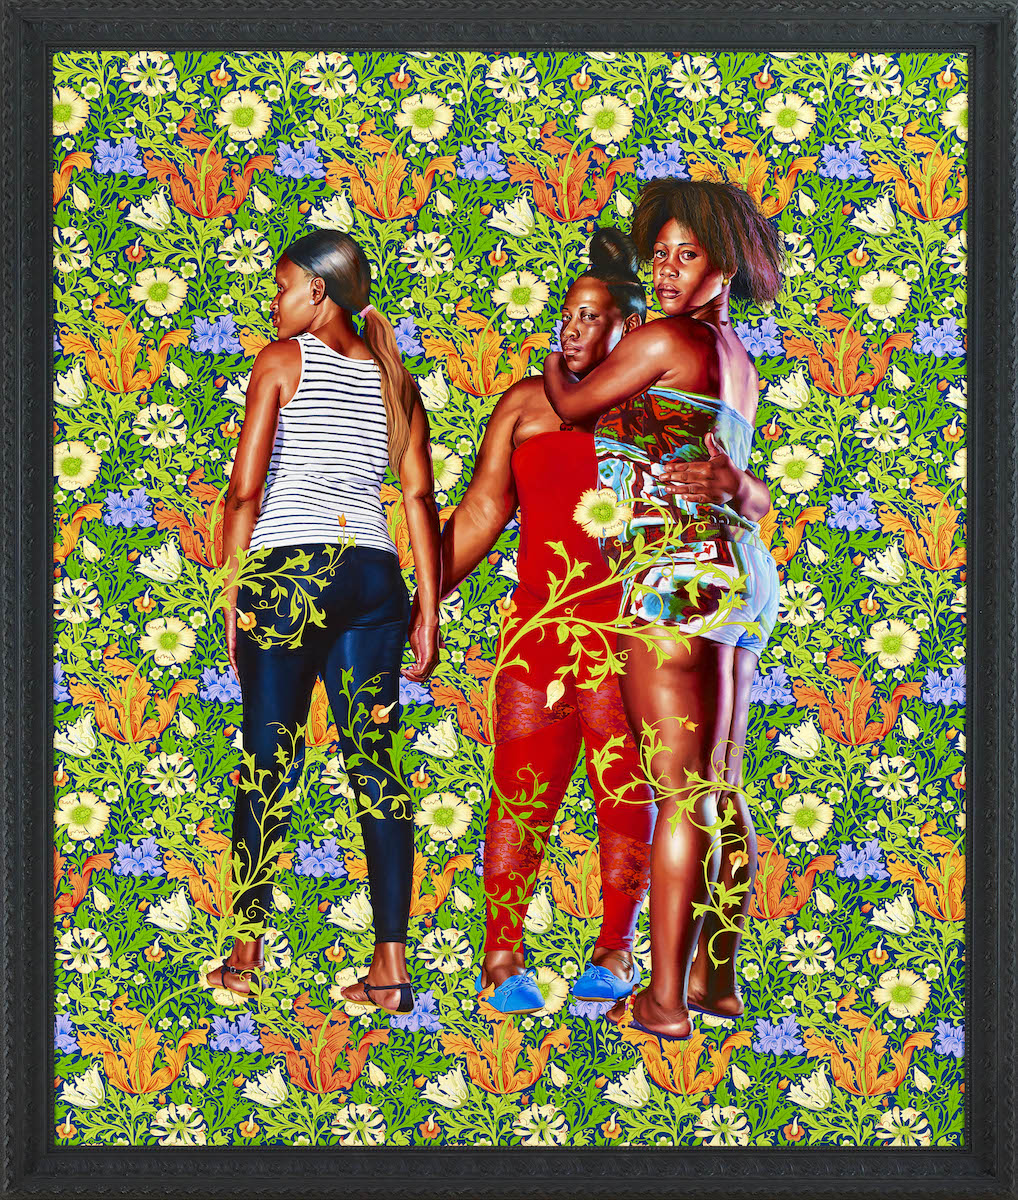 © 2019 Kehinde Wiley. Courtesy of Stephen Friedman Gallery.